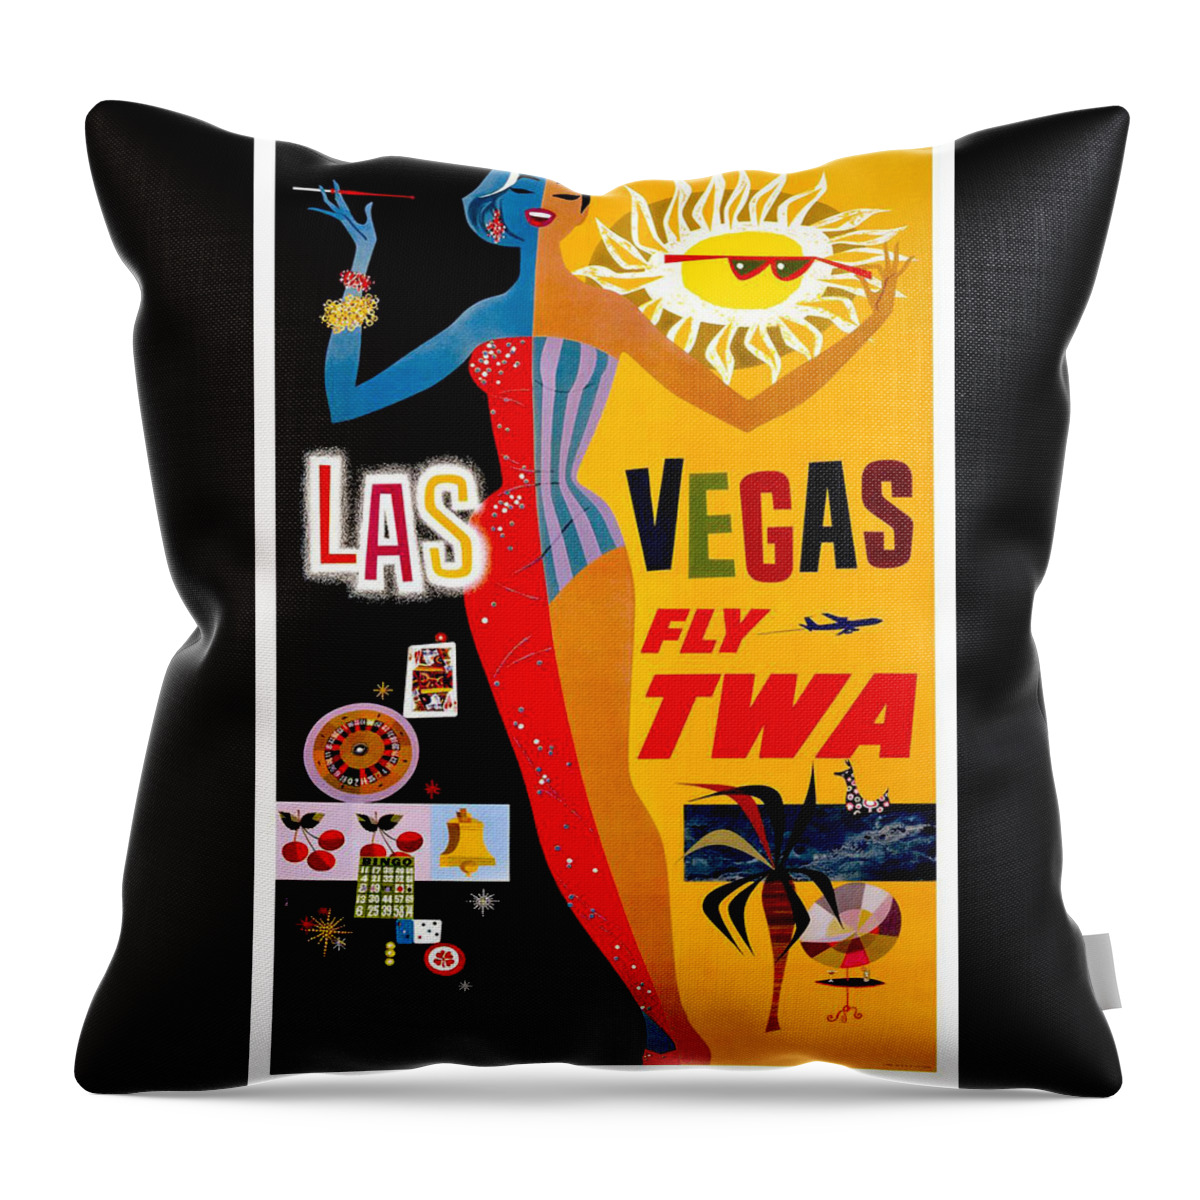 Las Vegas Throw Pillow featuring the digital art Vintage Travel Poster - Las Vegas by Georgia Clare